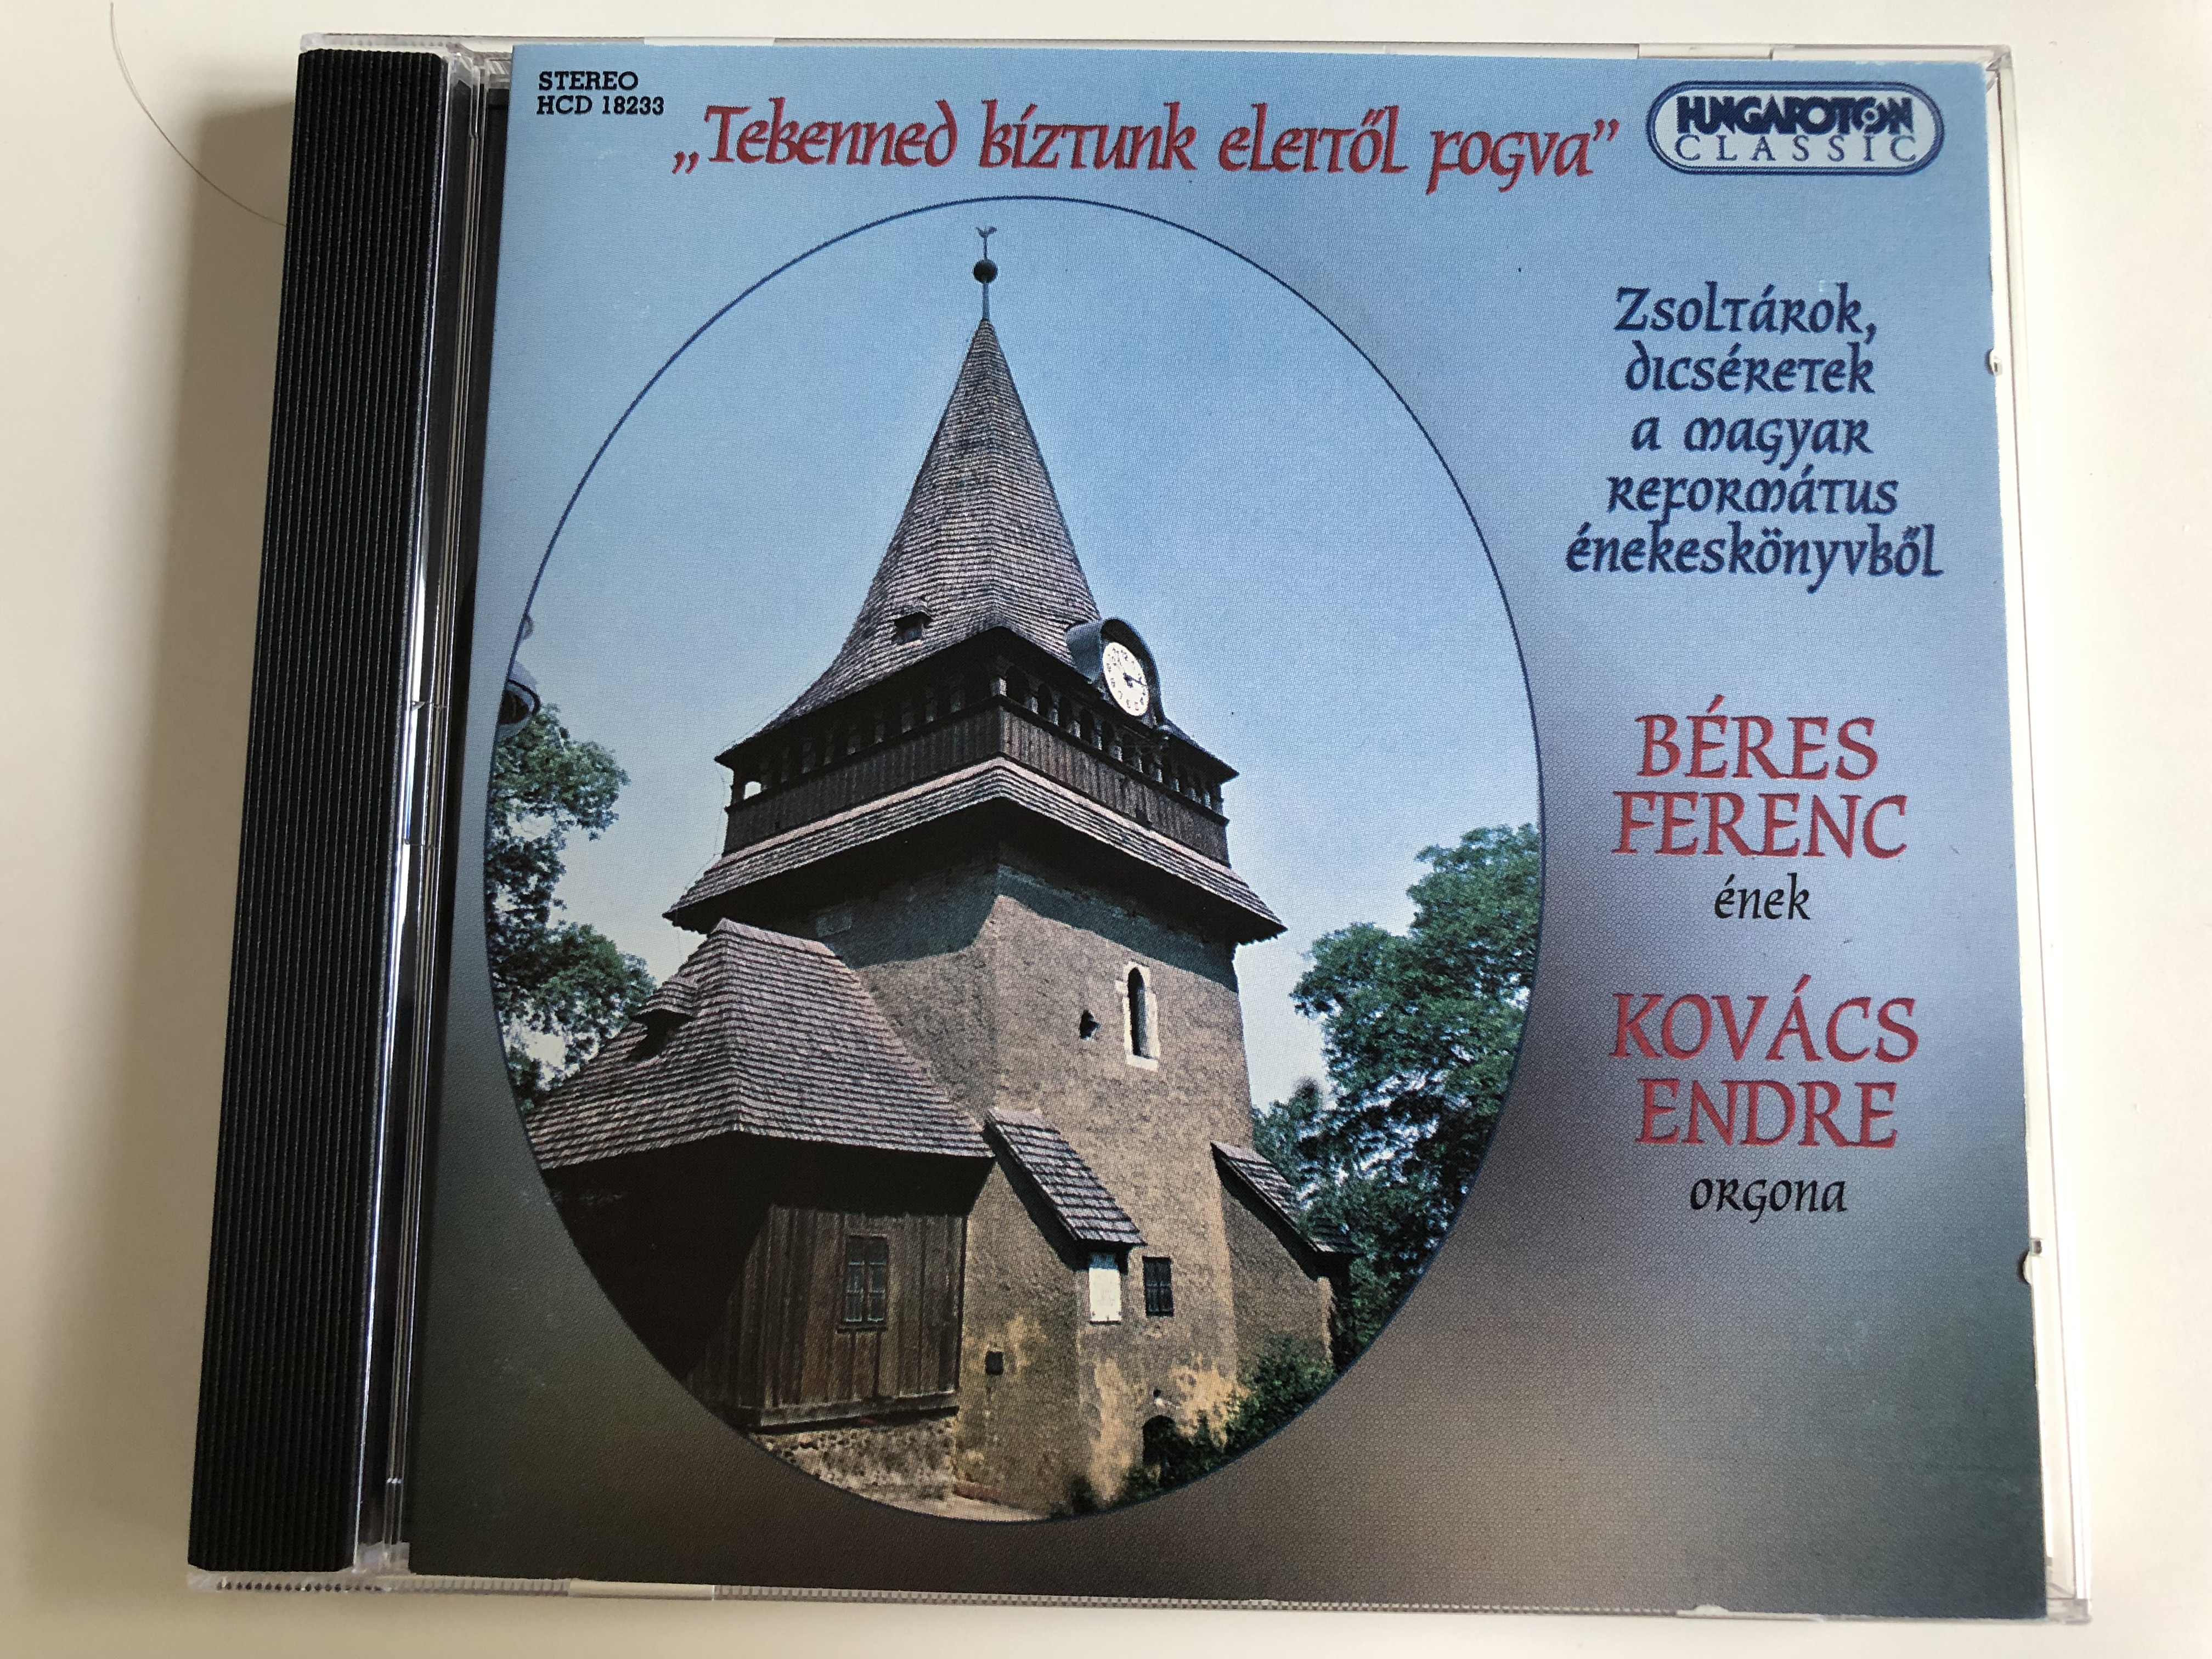 tebenned-b-ztunk-eleit-l-fogva-zsolt-rok-dics-retek-a-magyar-reform-tus-nekesk-nyvb-l-psalms-and-praises-from-the-reformed-songbooks-b-res-ferenc-vocals-kov-cs-endre-organ-hungaroton-audio-cd-1997-hcd-18233-1-.jpg